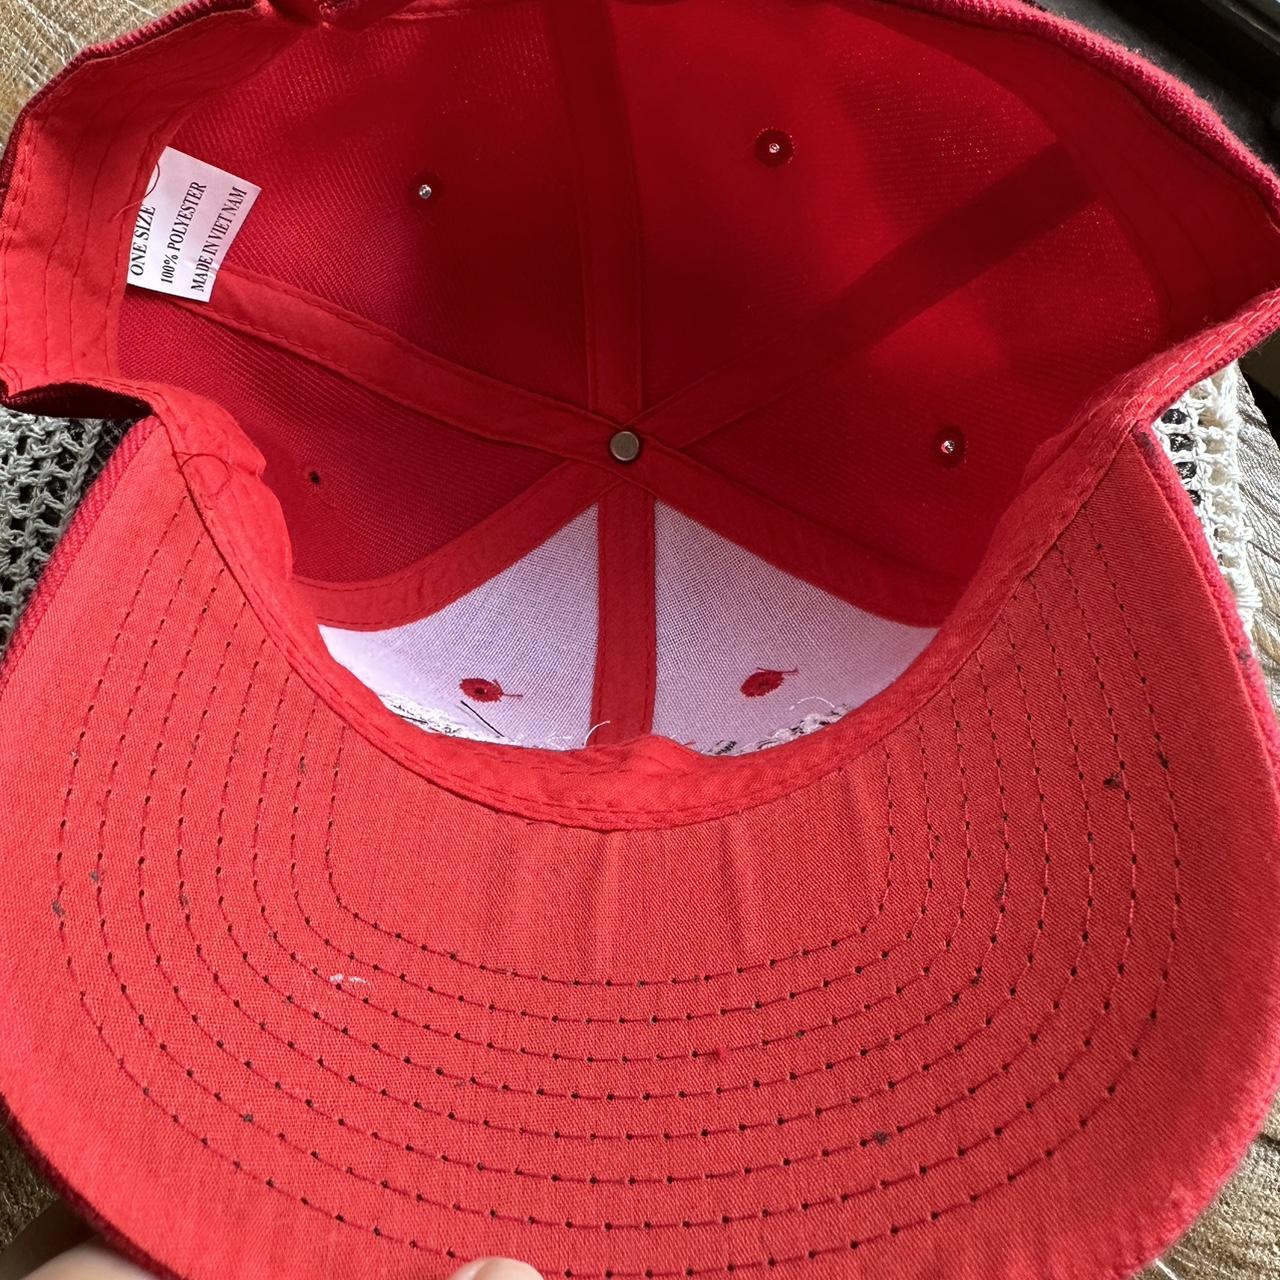 All Star Game 2015 MLB Cincinnati Reds Hat - Depop